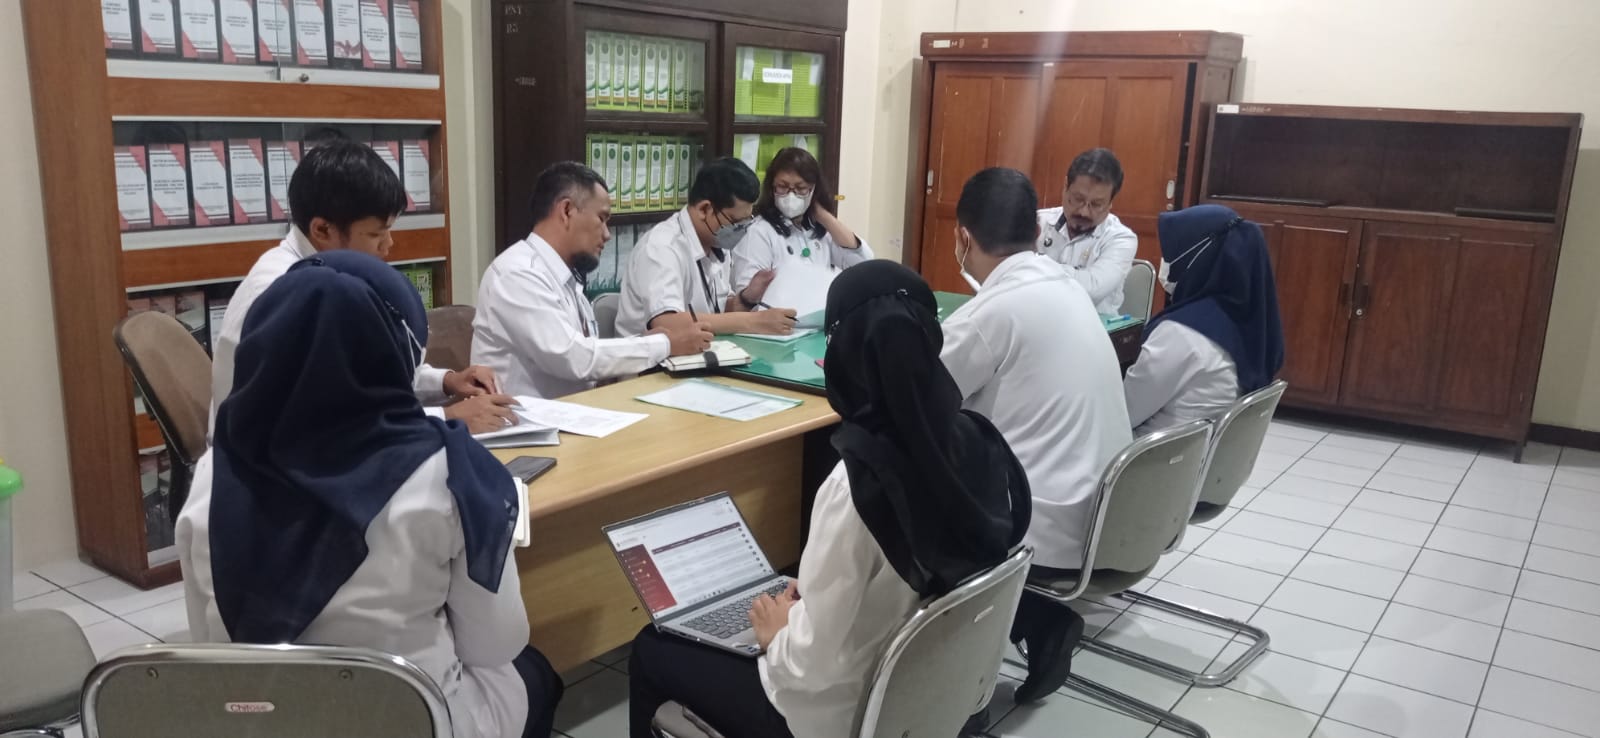 Rapat Monitoring dan Evaluasi Document Control Pengadilan Negeri Yogyakarta